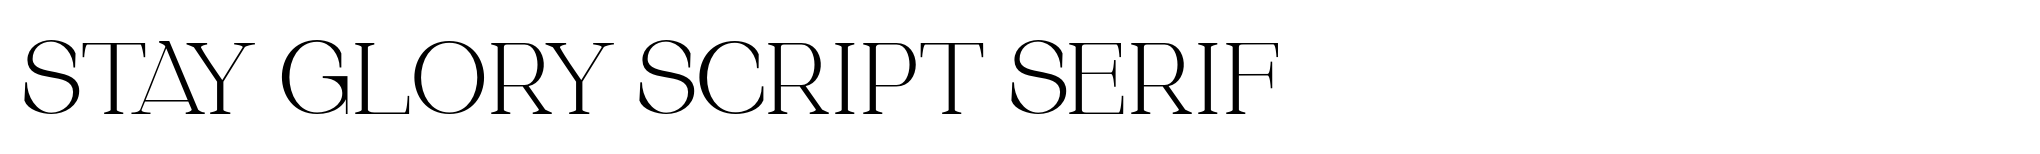 Stay Glory Script Serif image